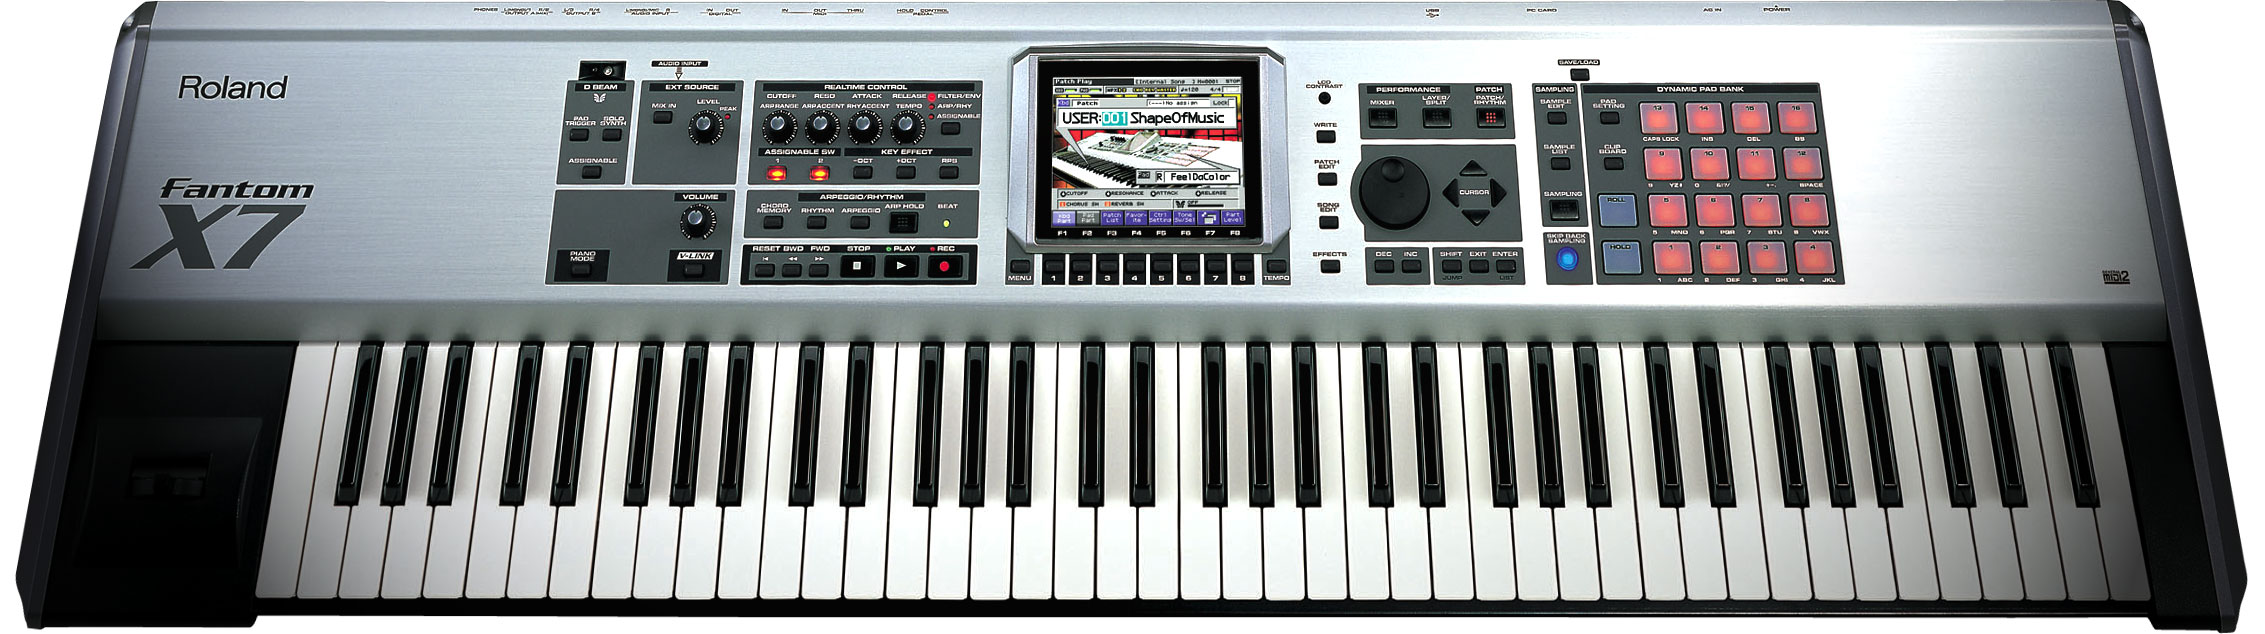 Roland Fantom X7 Workstation Keyboard